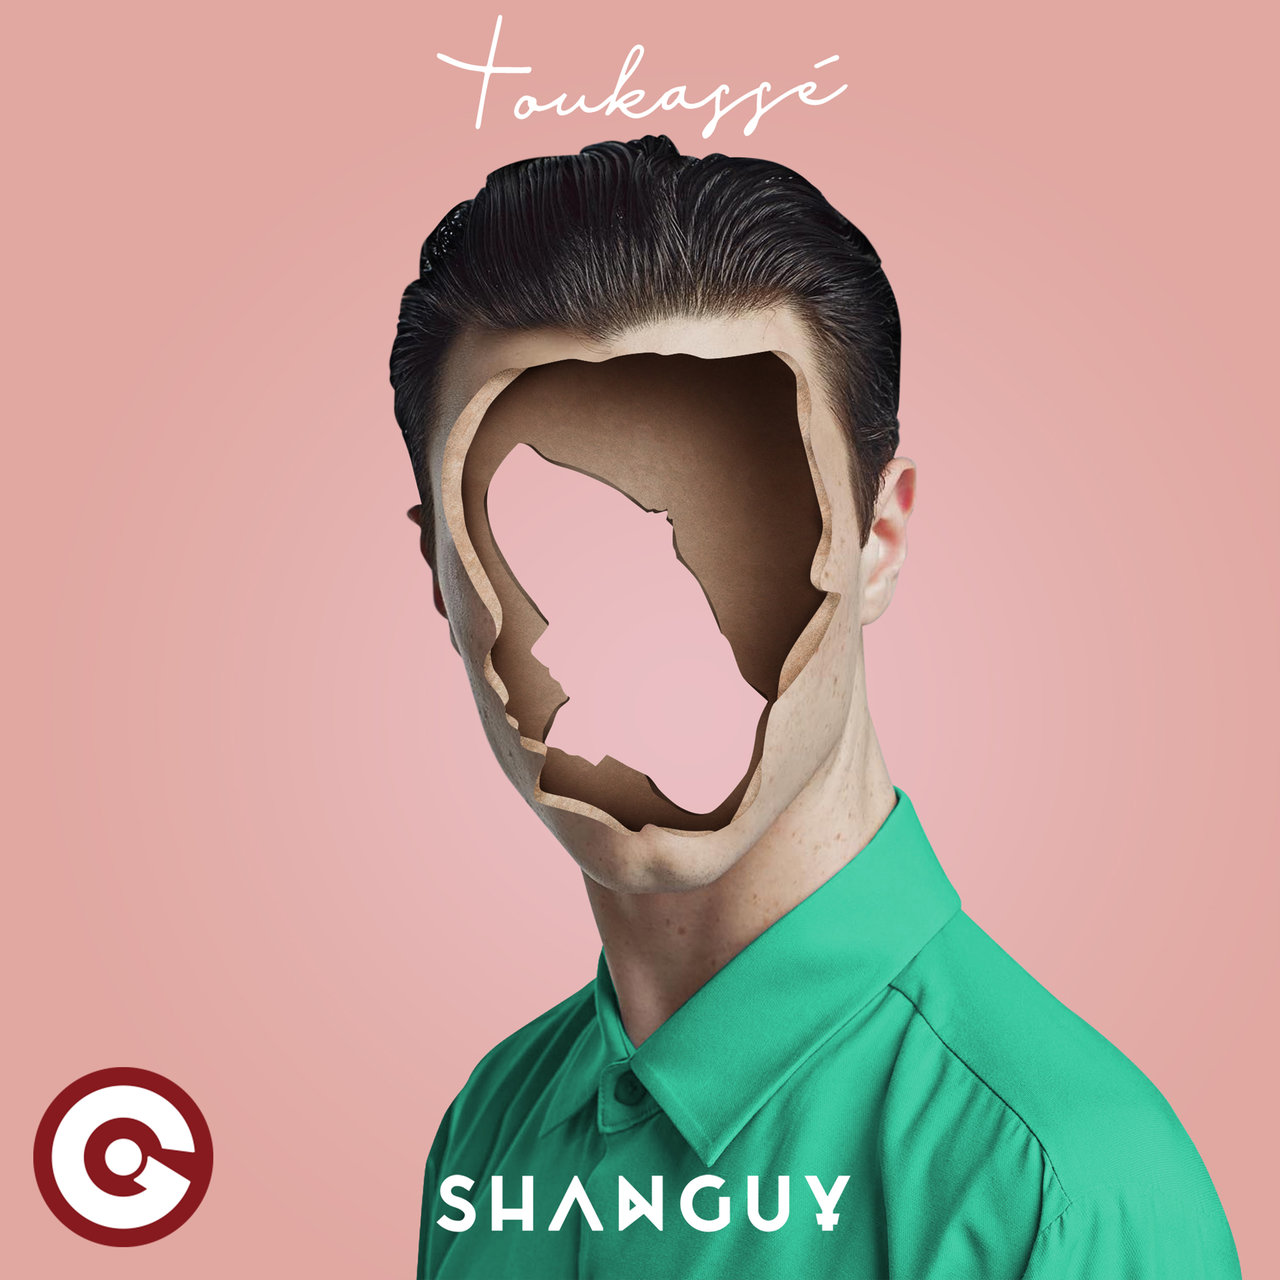 SHANGUY Toukassé cover artwork